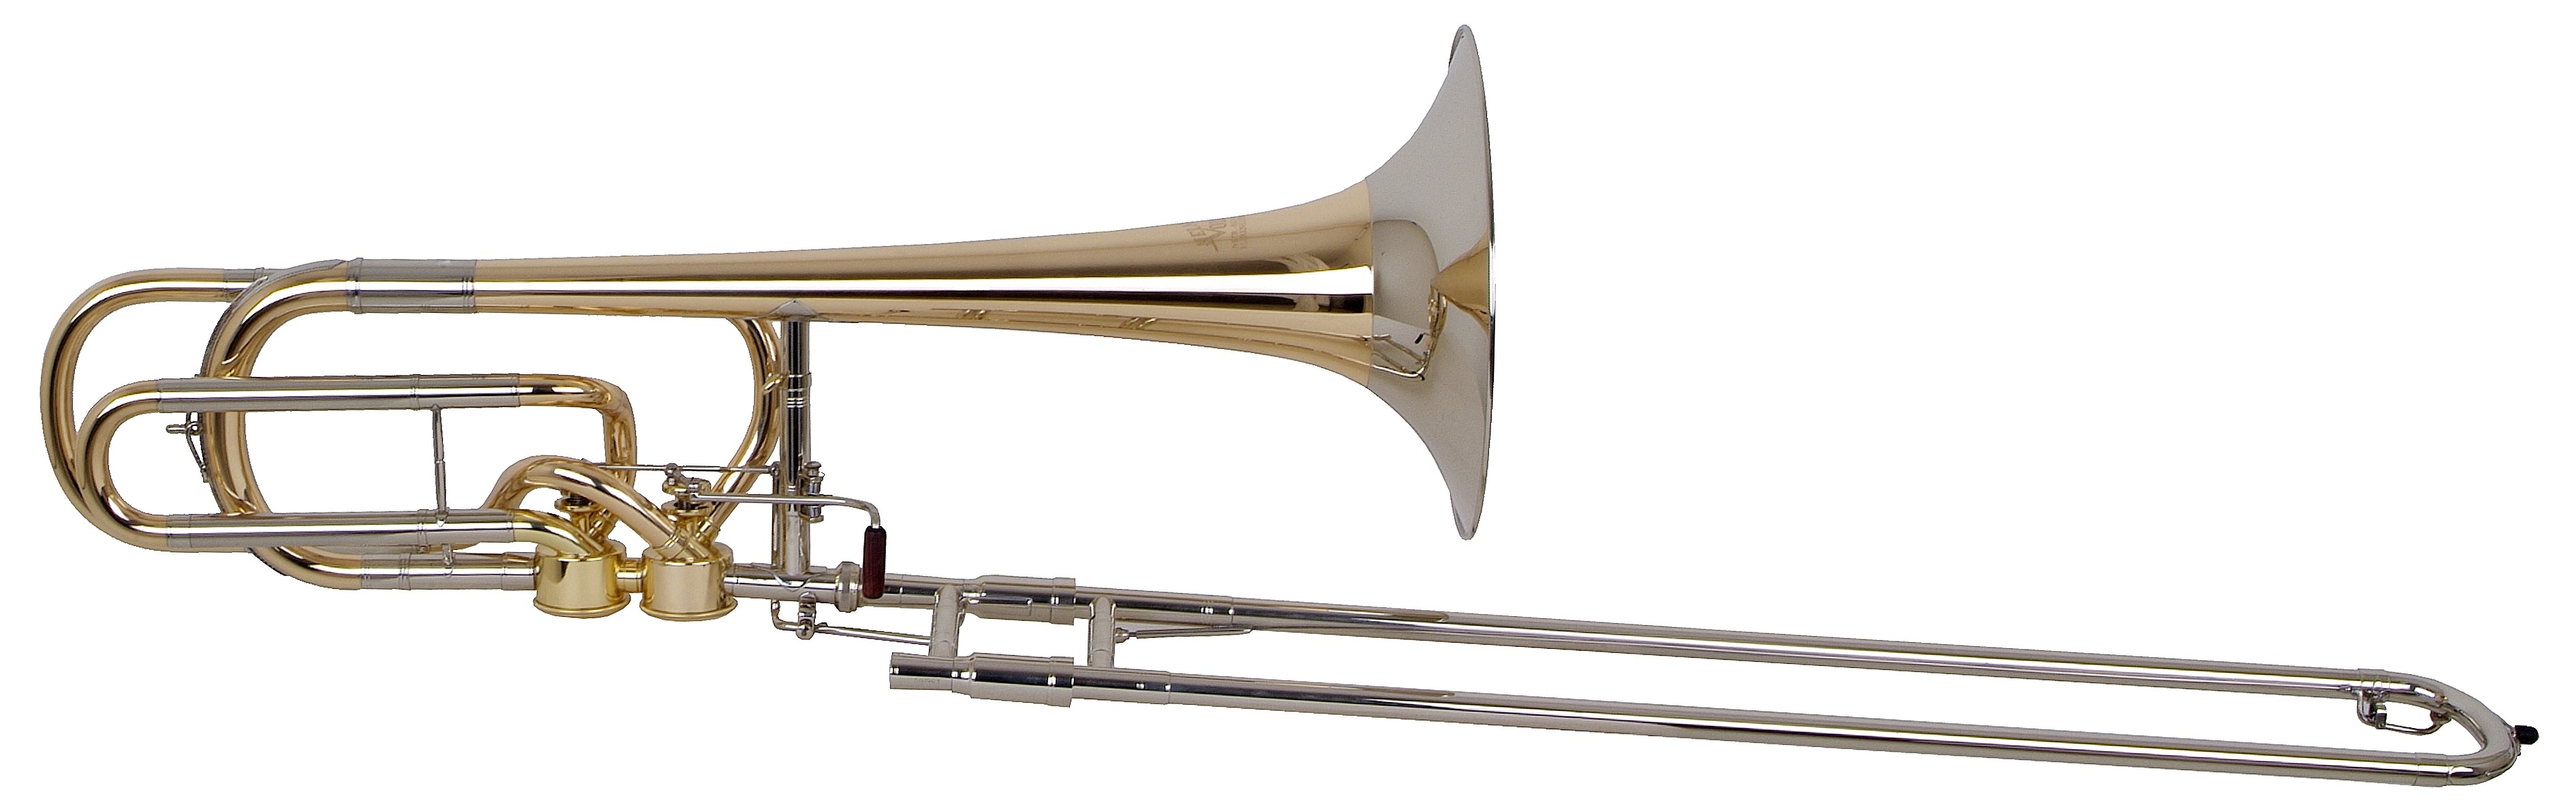 Bass trombones Helmut Voigt, Premium quality, Deep tone, Instrumental excellence, 3780x1190 Dual Screen Desktop